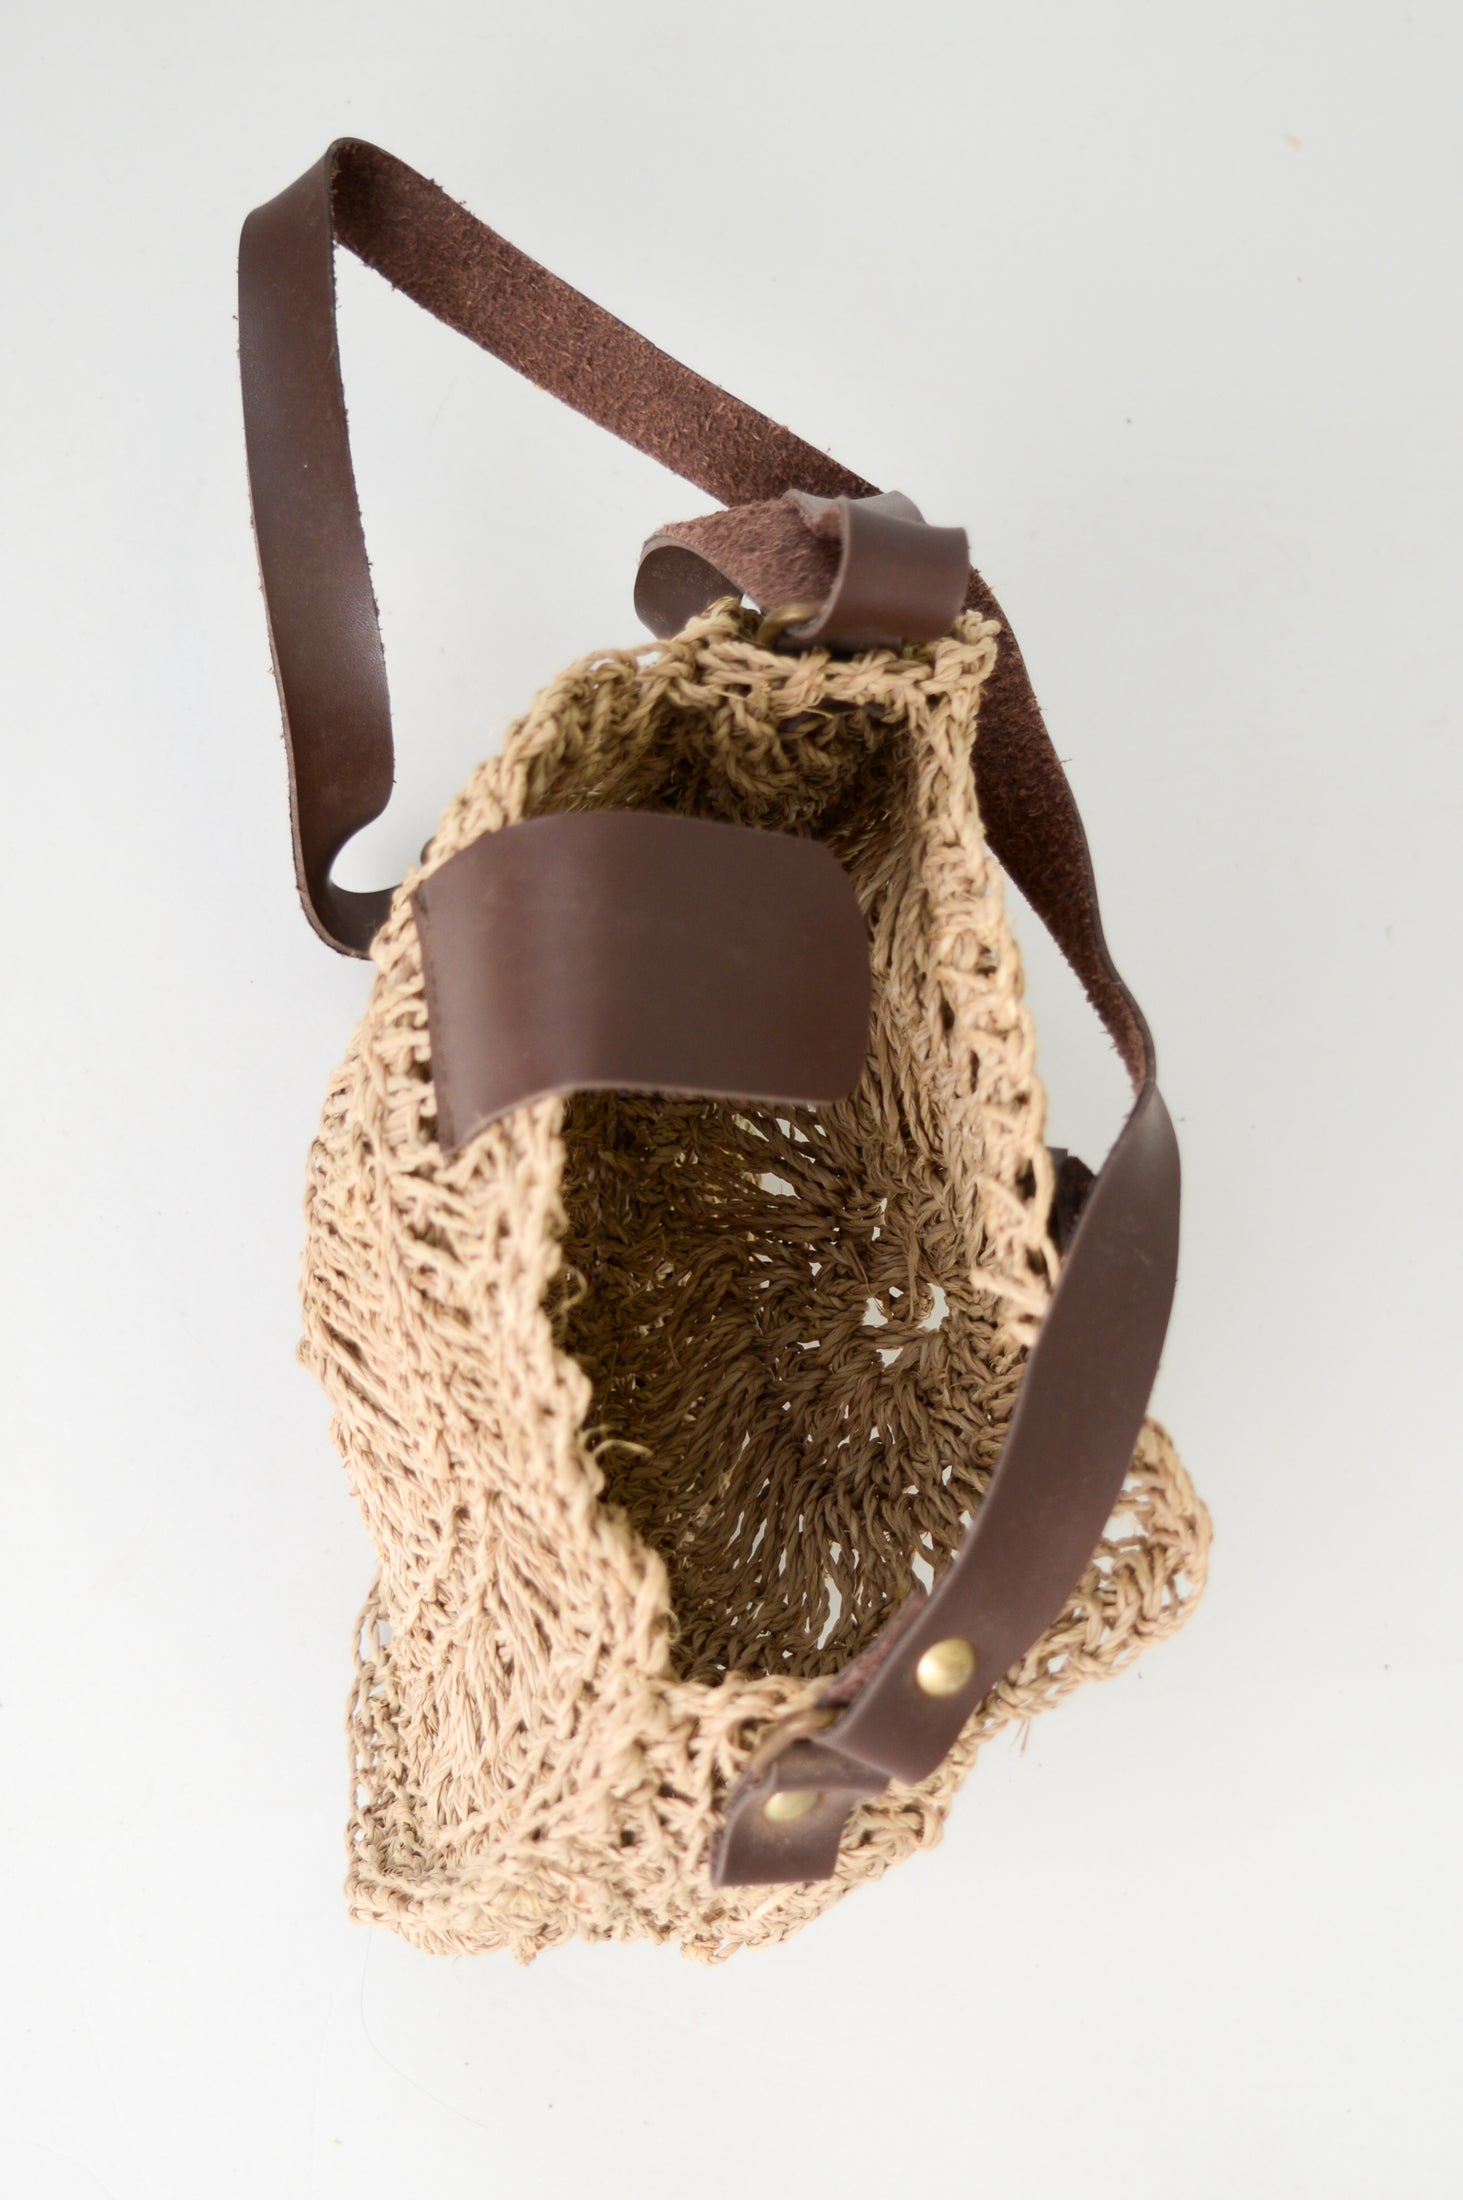 Plain Round Rattan Bag With Handle And Detachable Strap - Natural Handwoven  Beach Bag Bali | Rattan bag, Bags, Woven bag